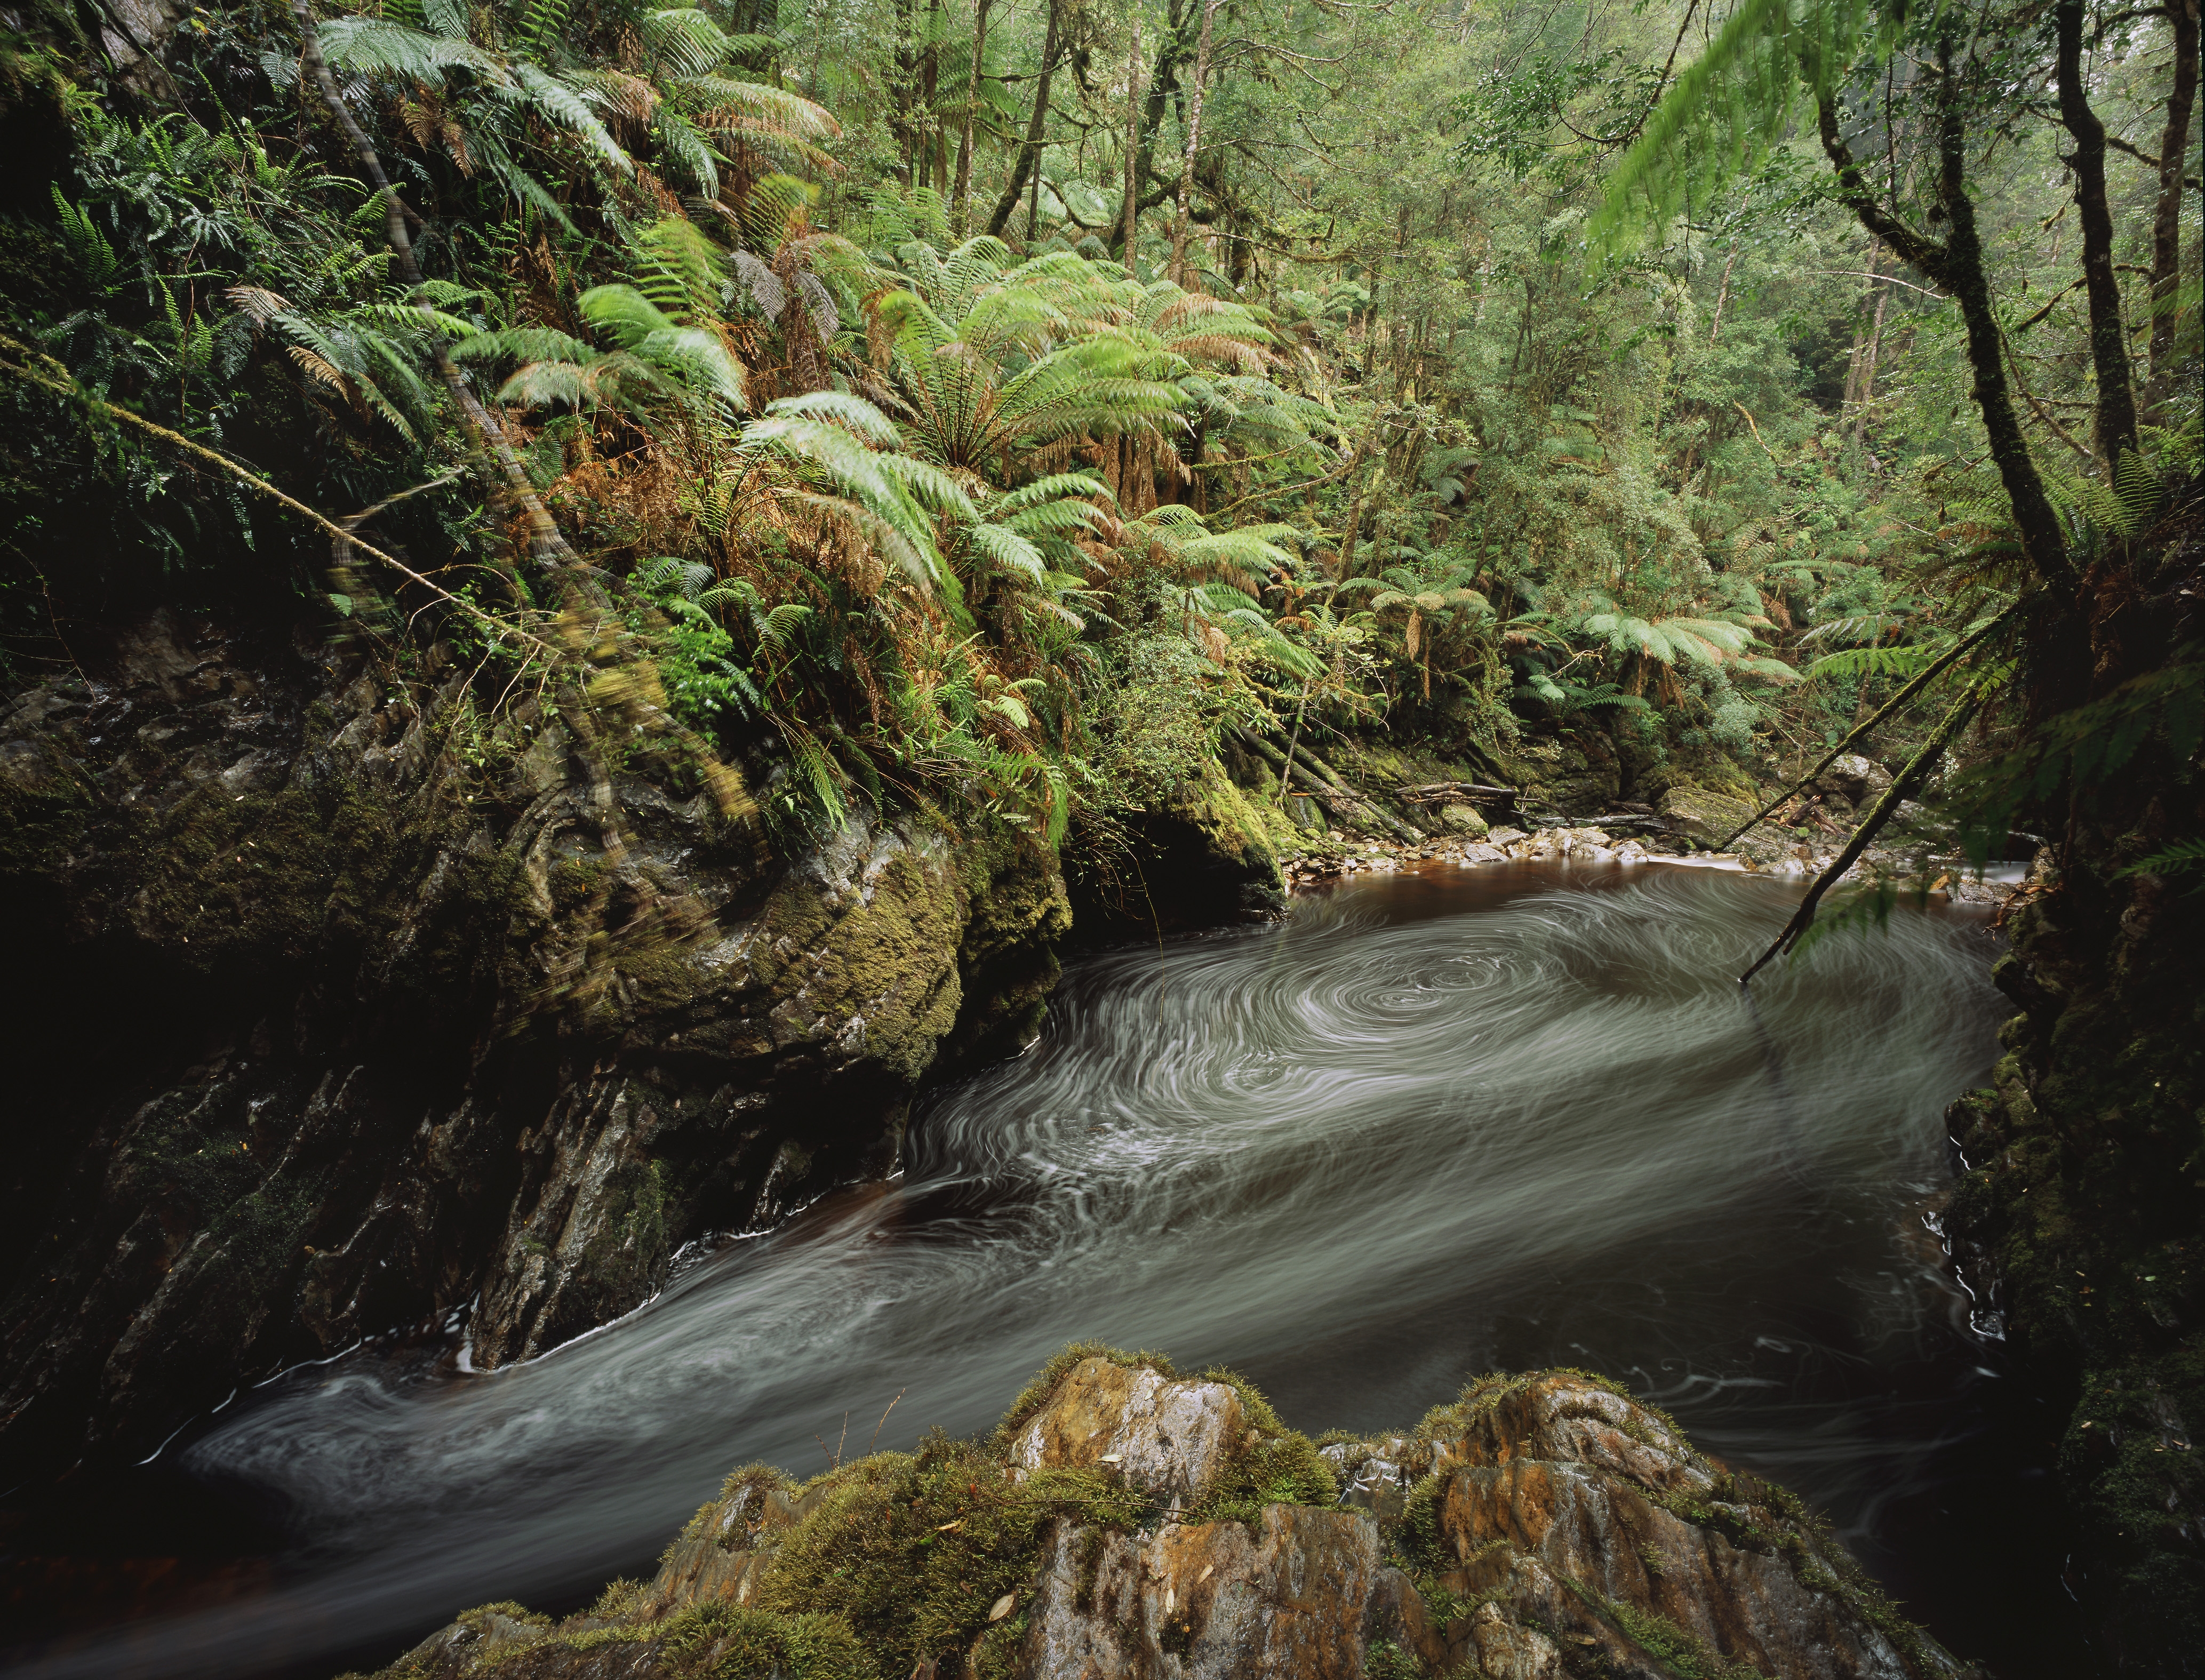 Eddies in the Bird River running through temperate rainforest, Western Tasmania, Australia (Auscape/UIG/Getty Images)